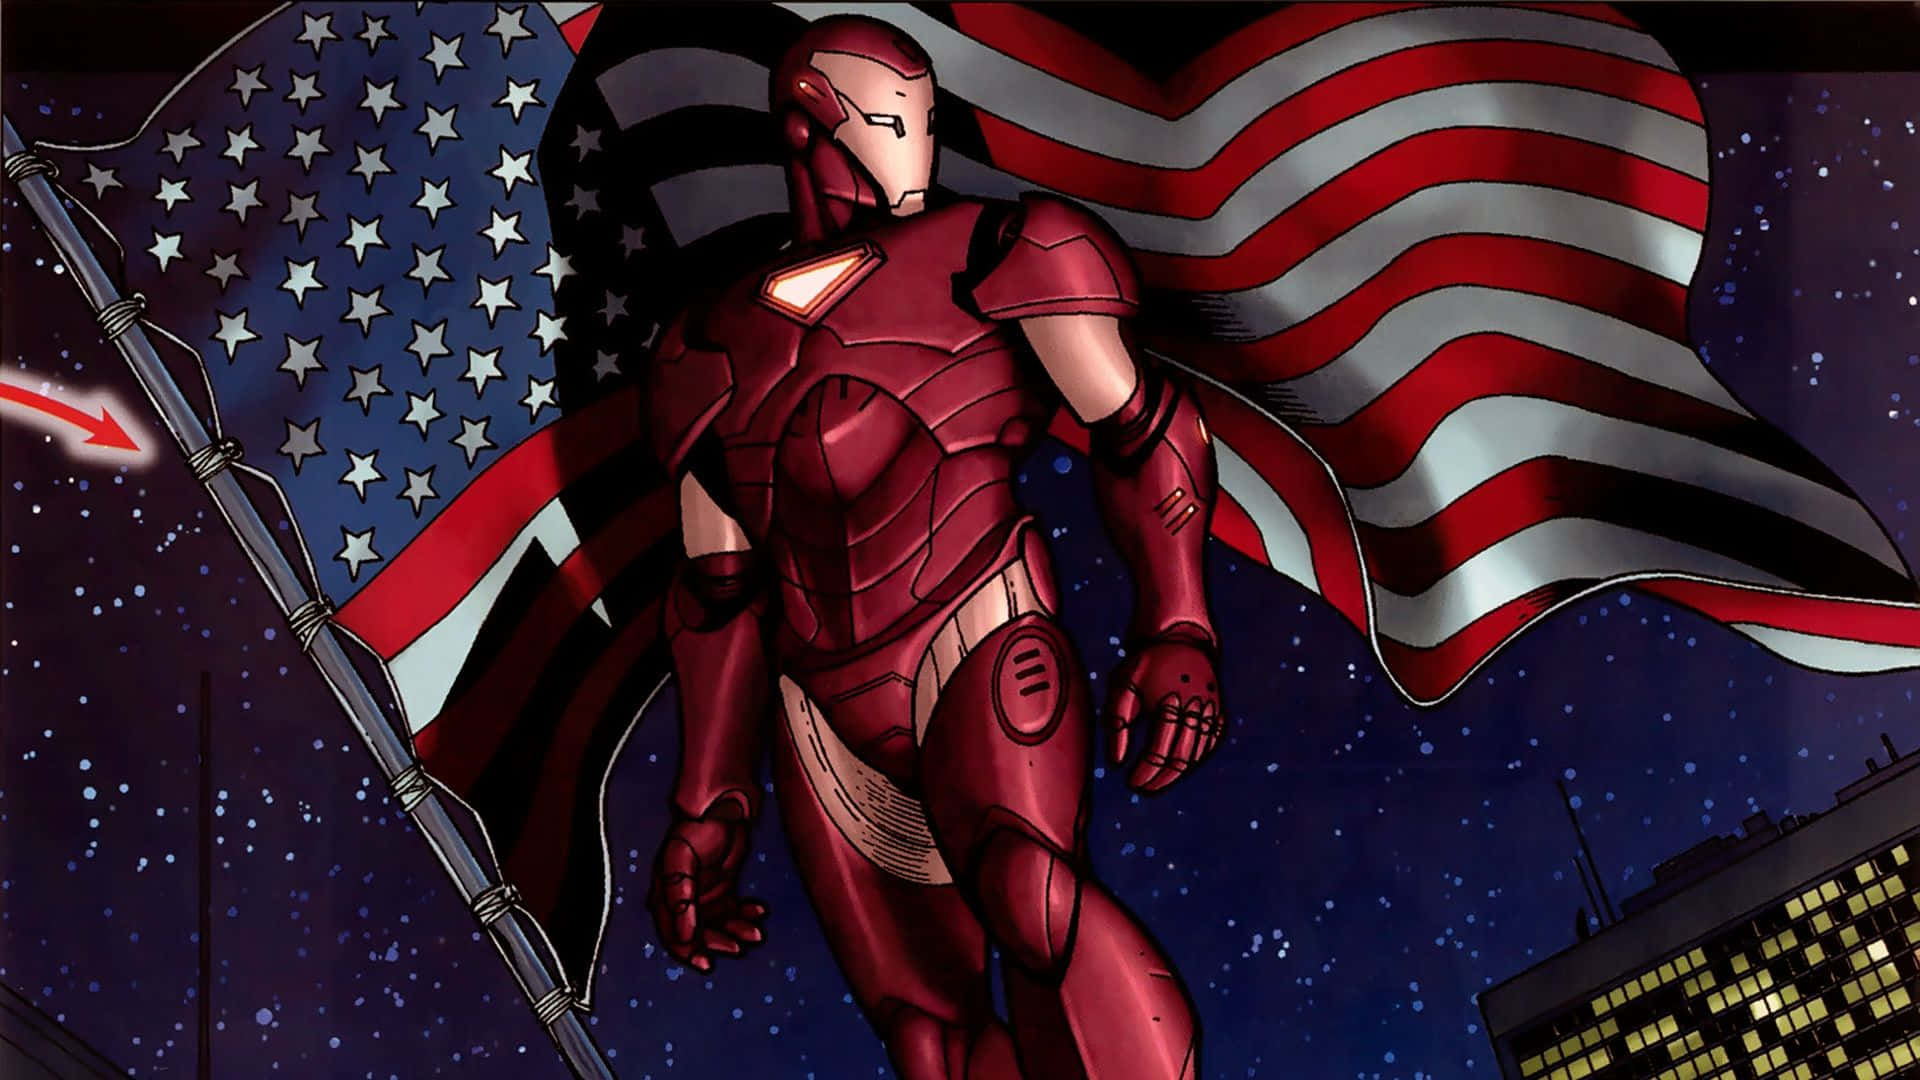 Tony Stark AKA Iron Man is the superhero of the Marvel Universe. Wallpaper